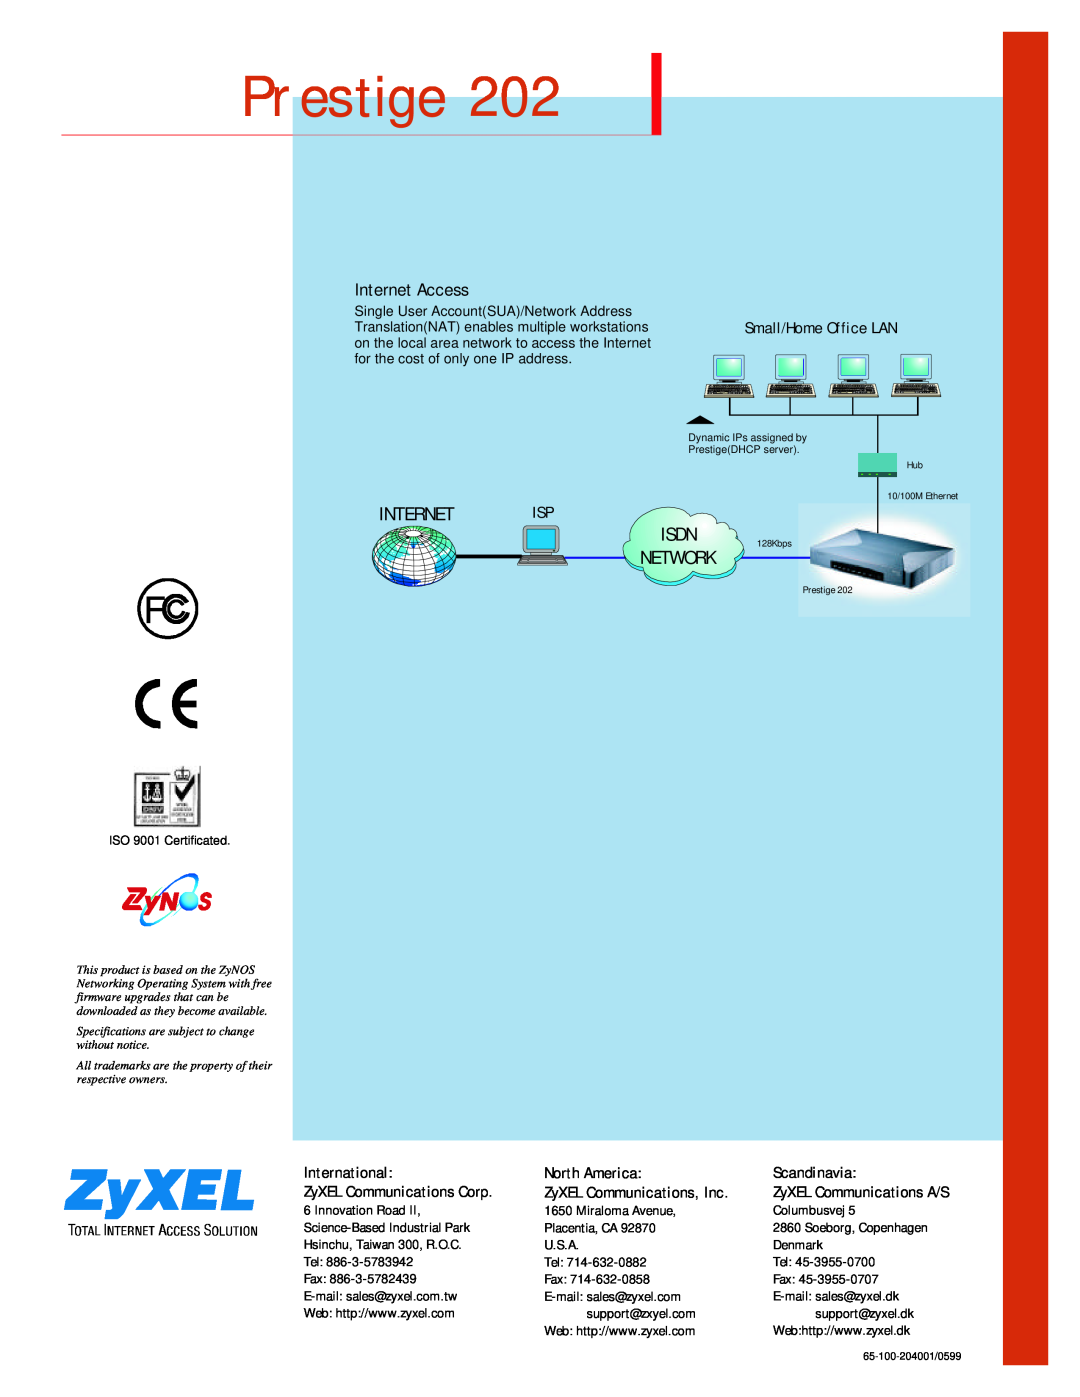 ZyXEL Communications 202 specifications Prestige, Internet Access, Isdn, International, North America, Scandinavia 